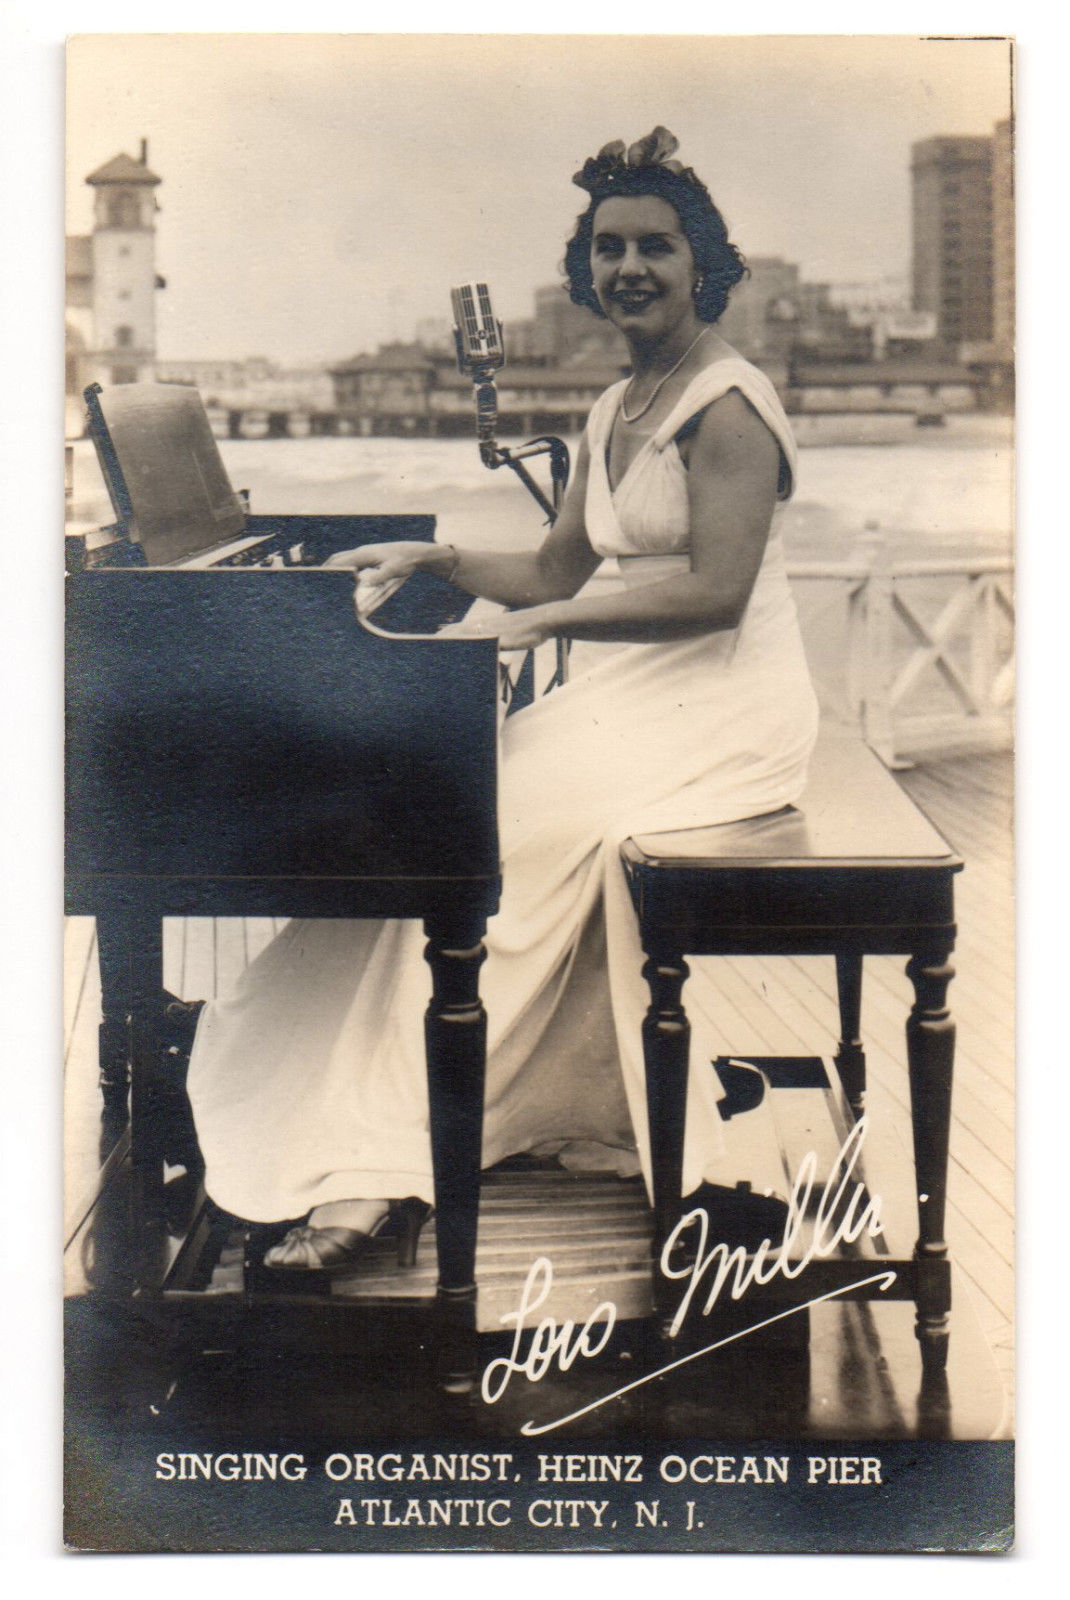 Atlantic City - Lois Miller Singing Organist - Heinz Ocean Pier